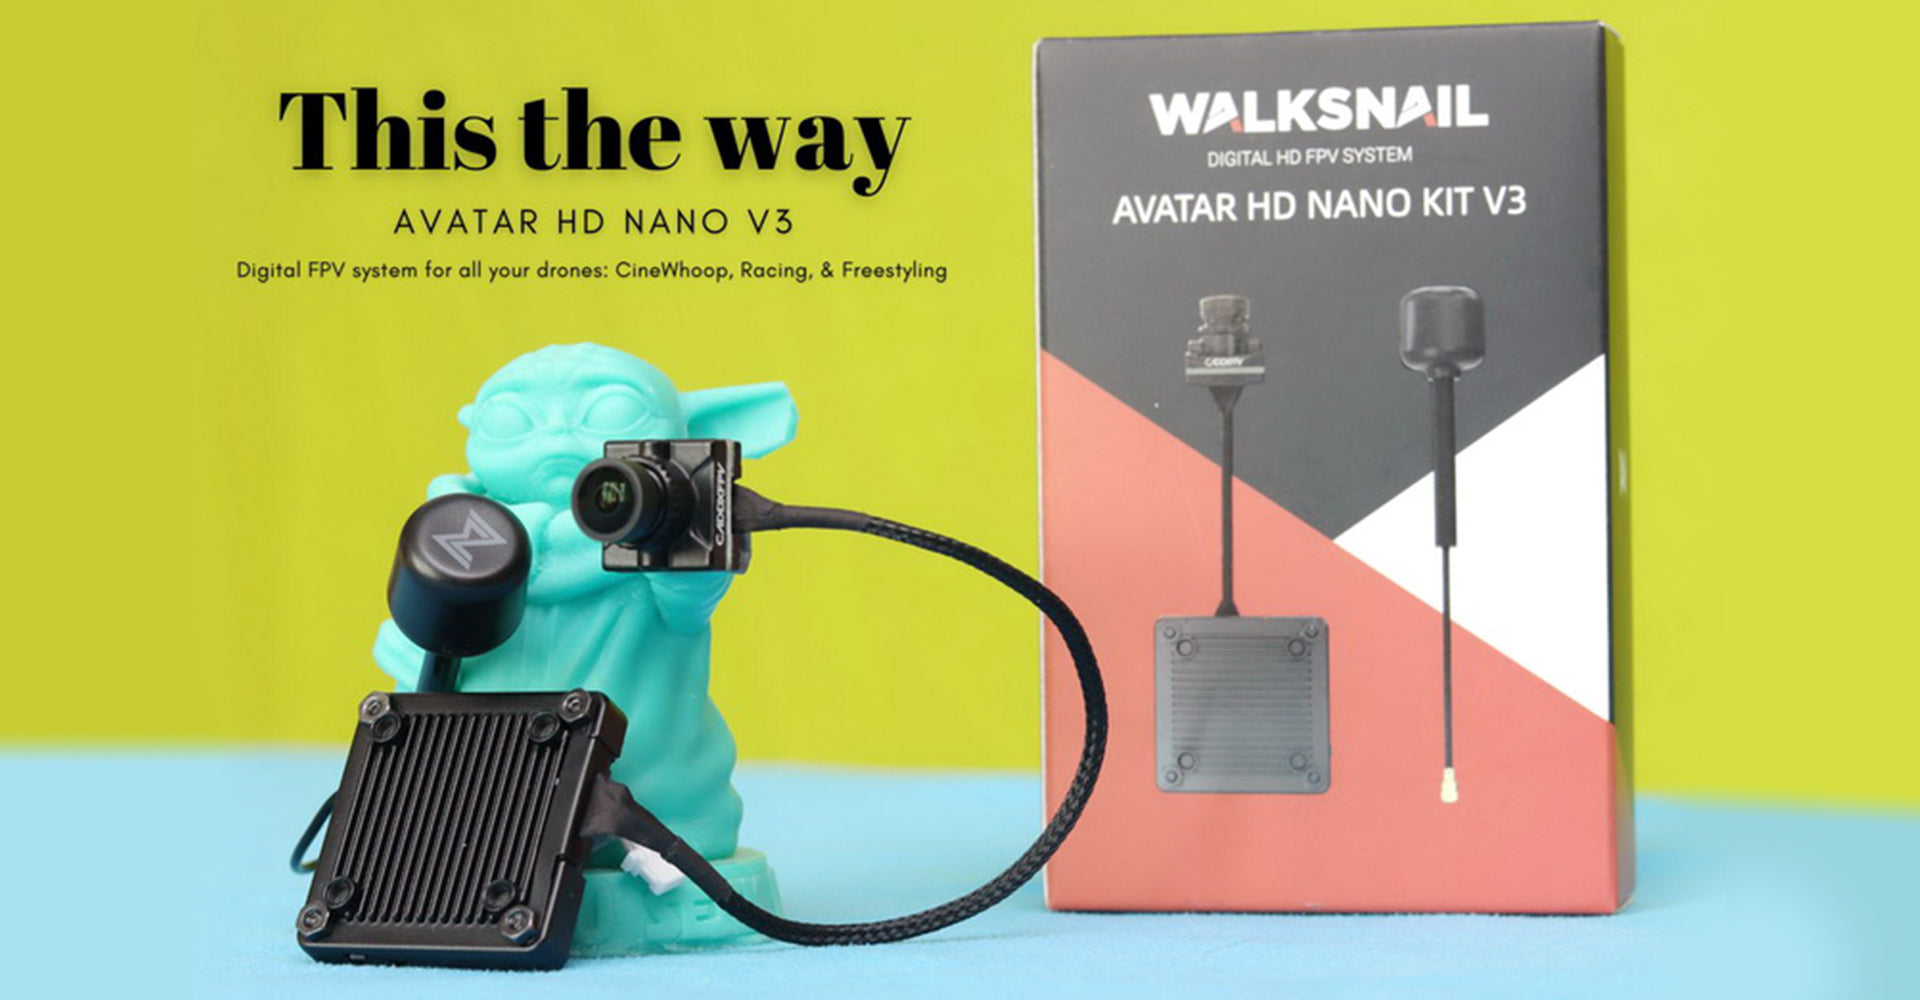 Walksnail Avatar HD Nano V3: Digital FPV for all your drones